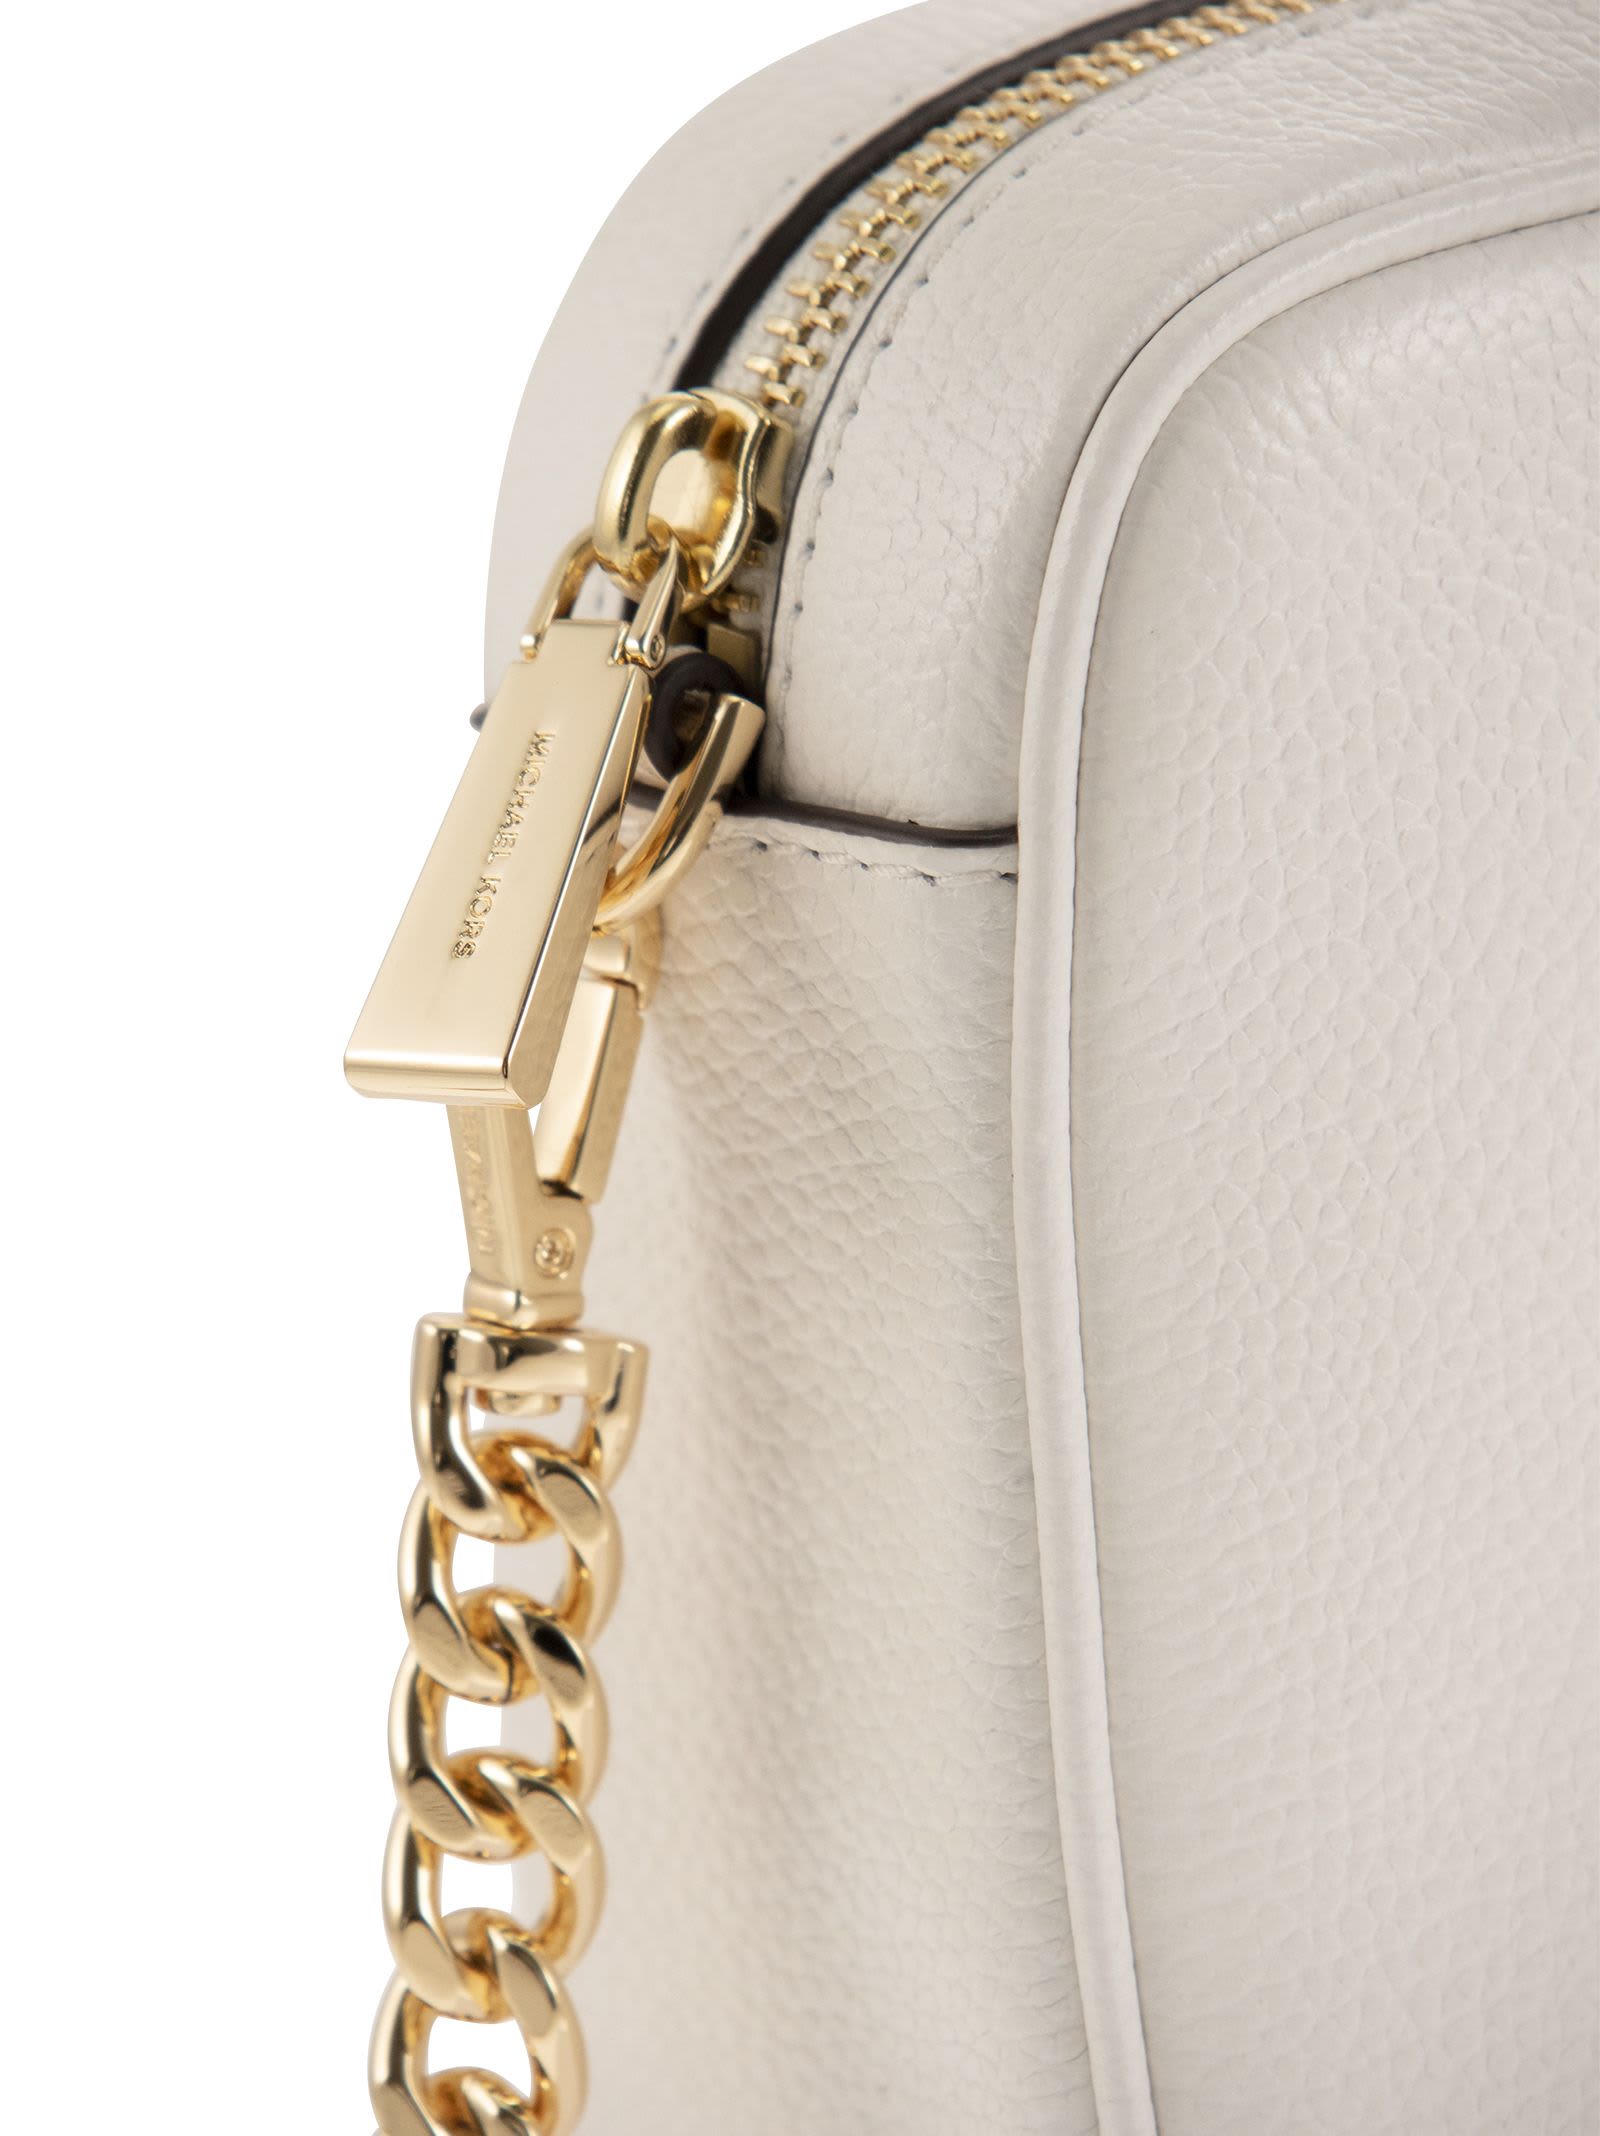 Shop Michael Kors Ginny - Leather Shoulder Bag In White